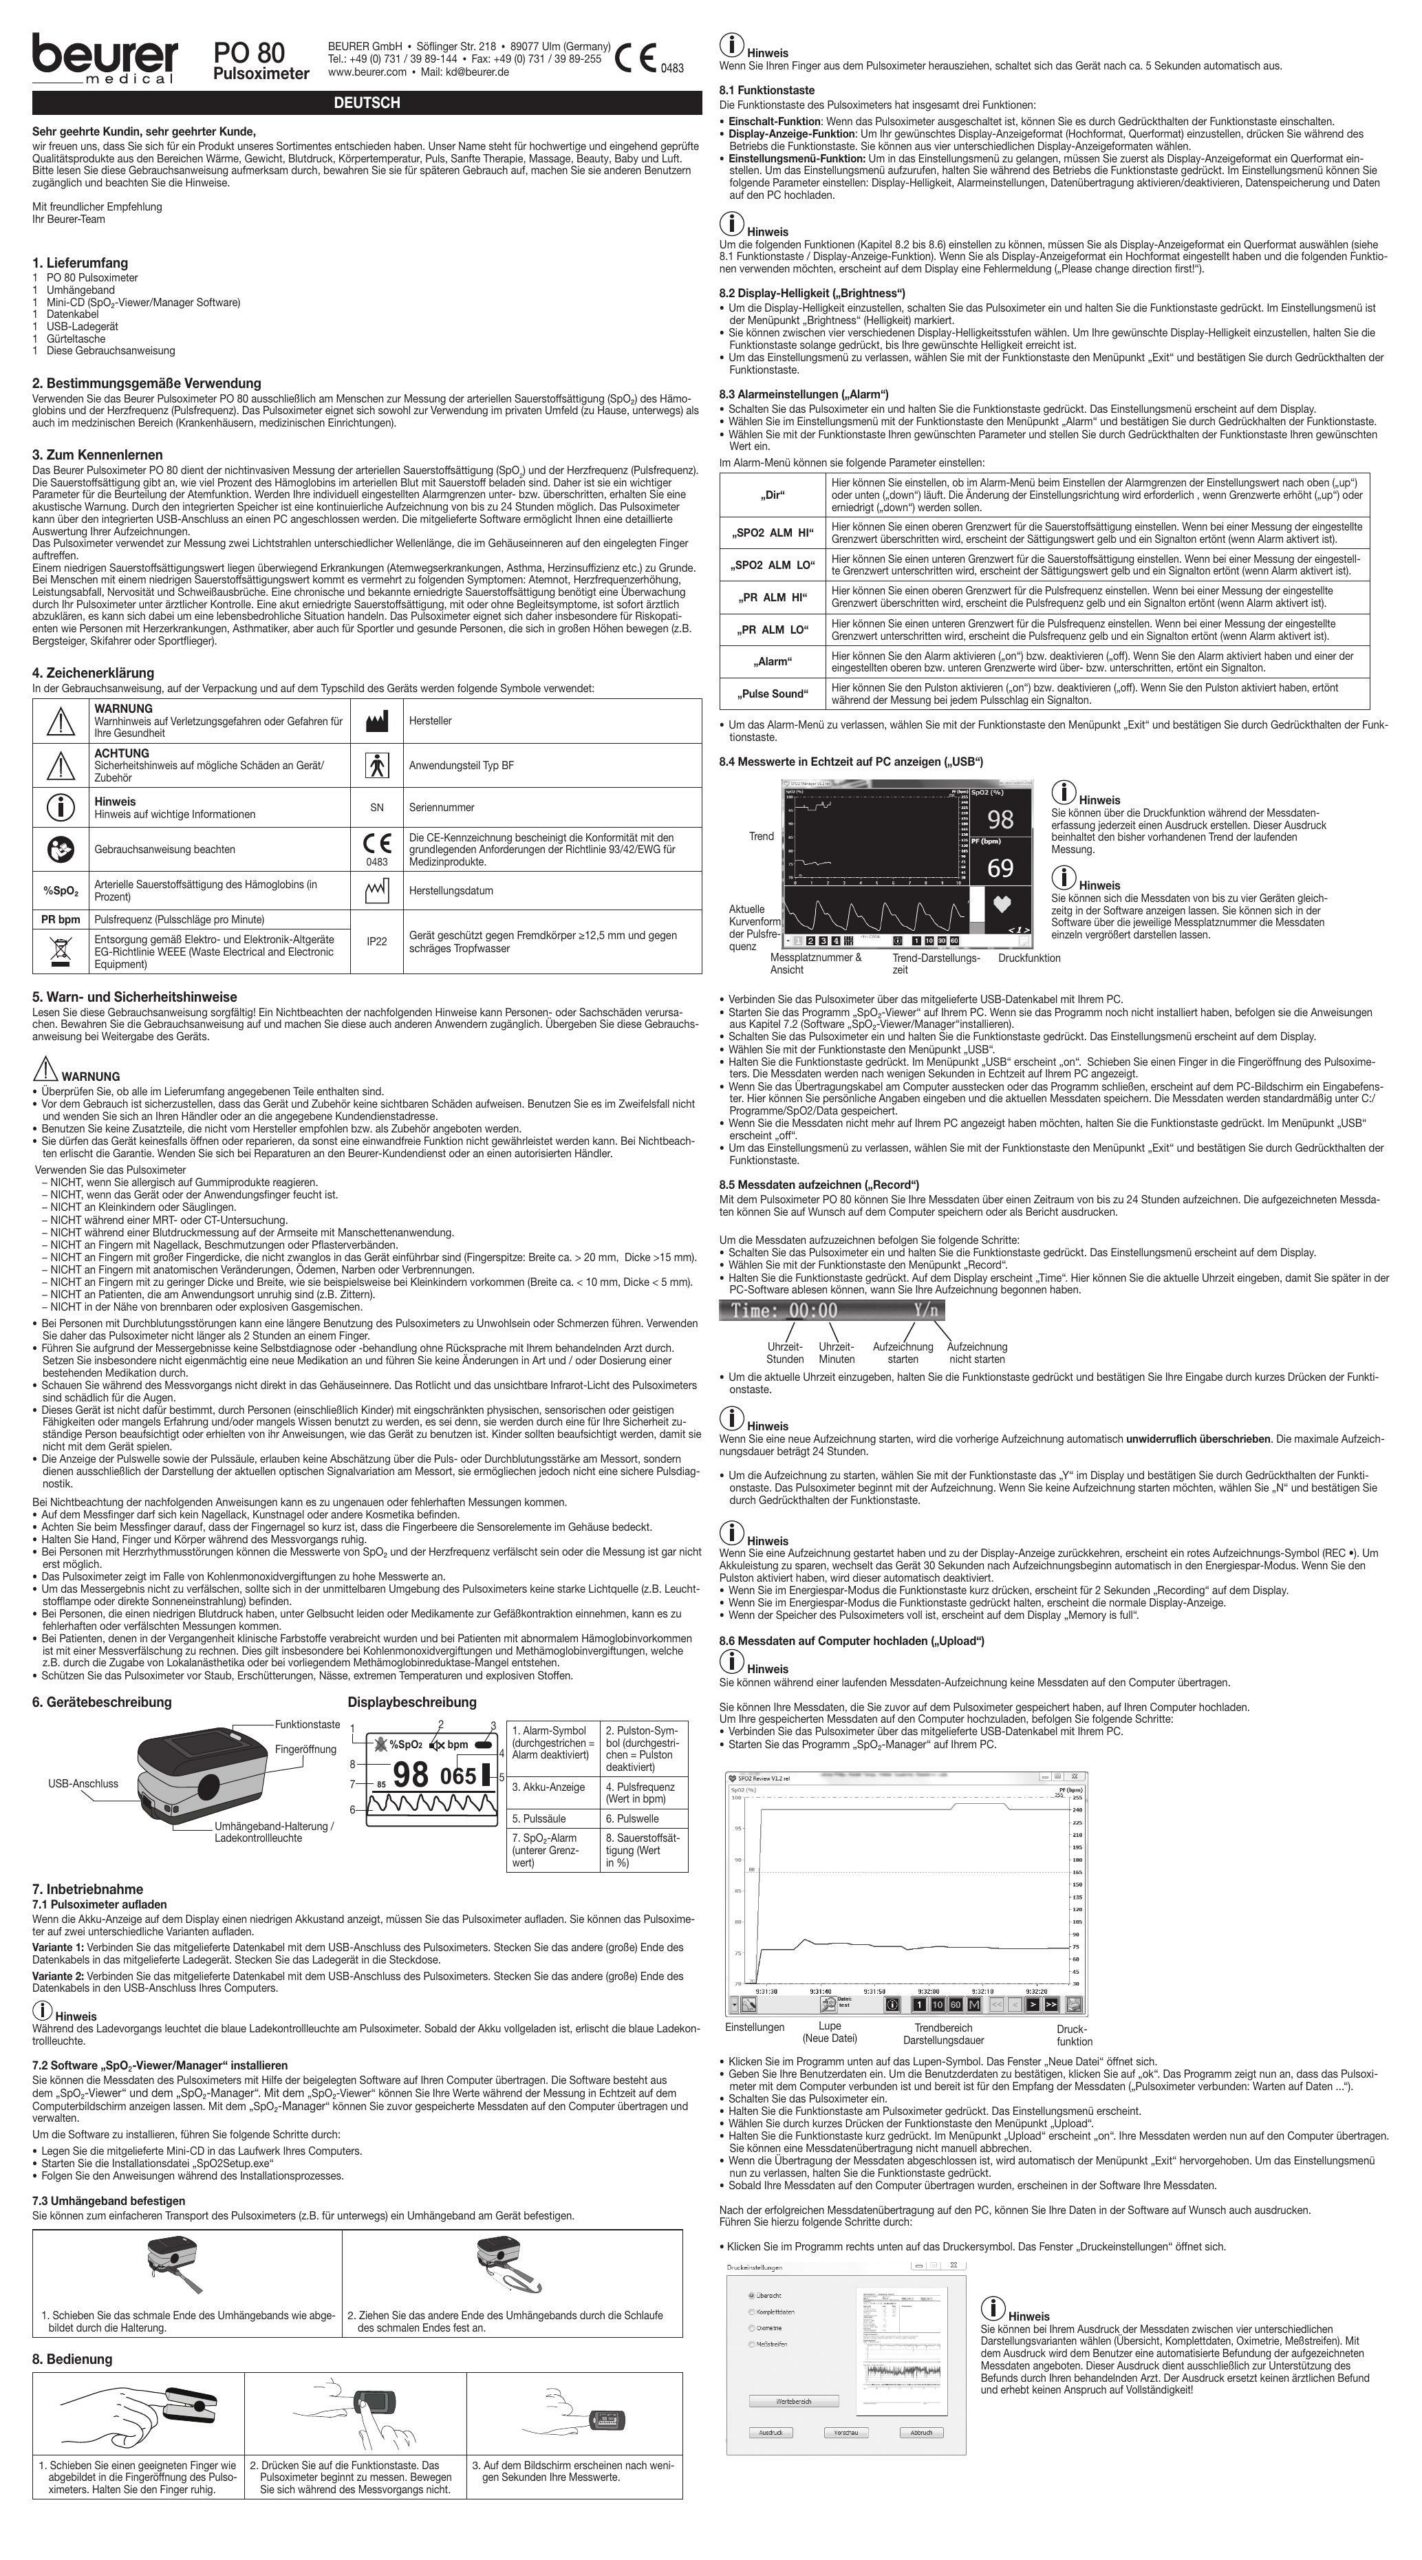 po-80-pulse-oximeter-user-manual.pdf